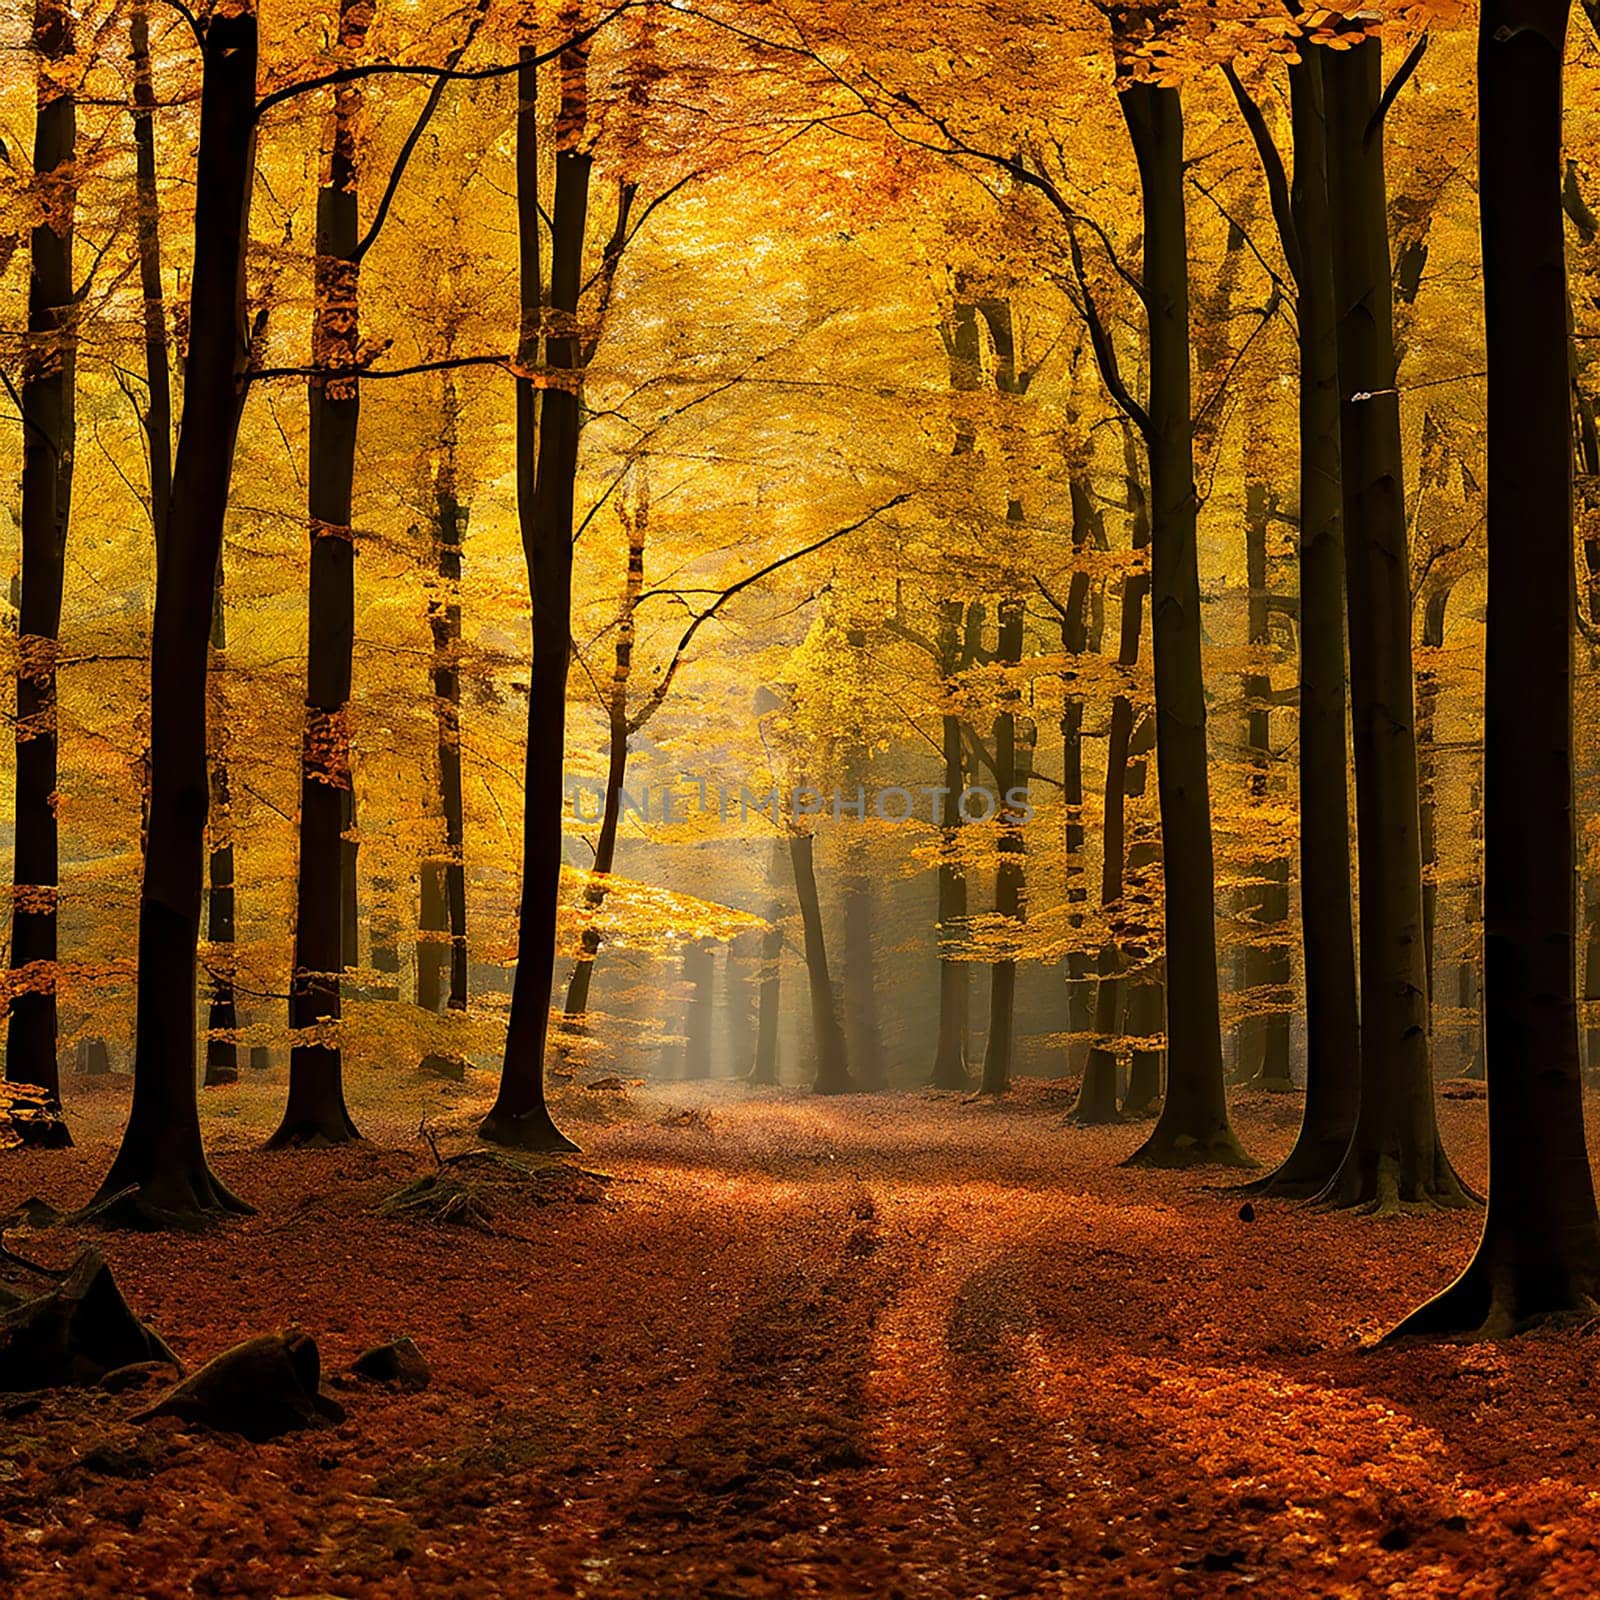 Fall's Splendor: Vibrant Forests of De Hoge Veluwe National Park